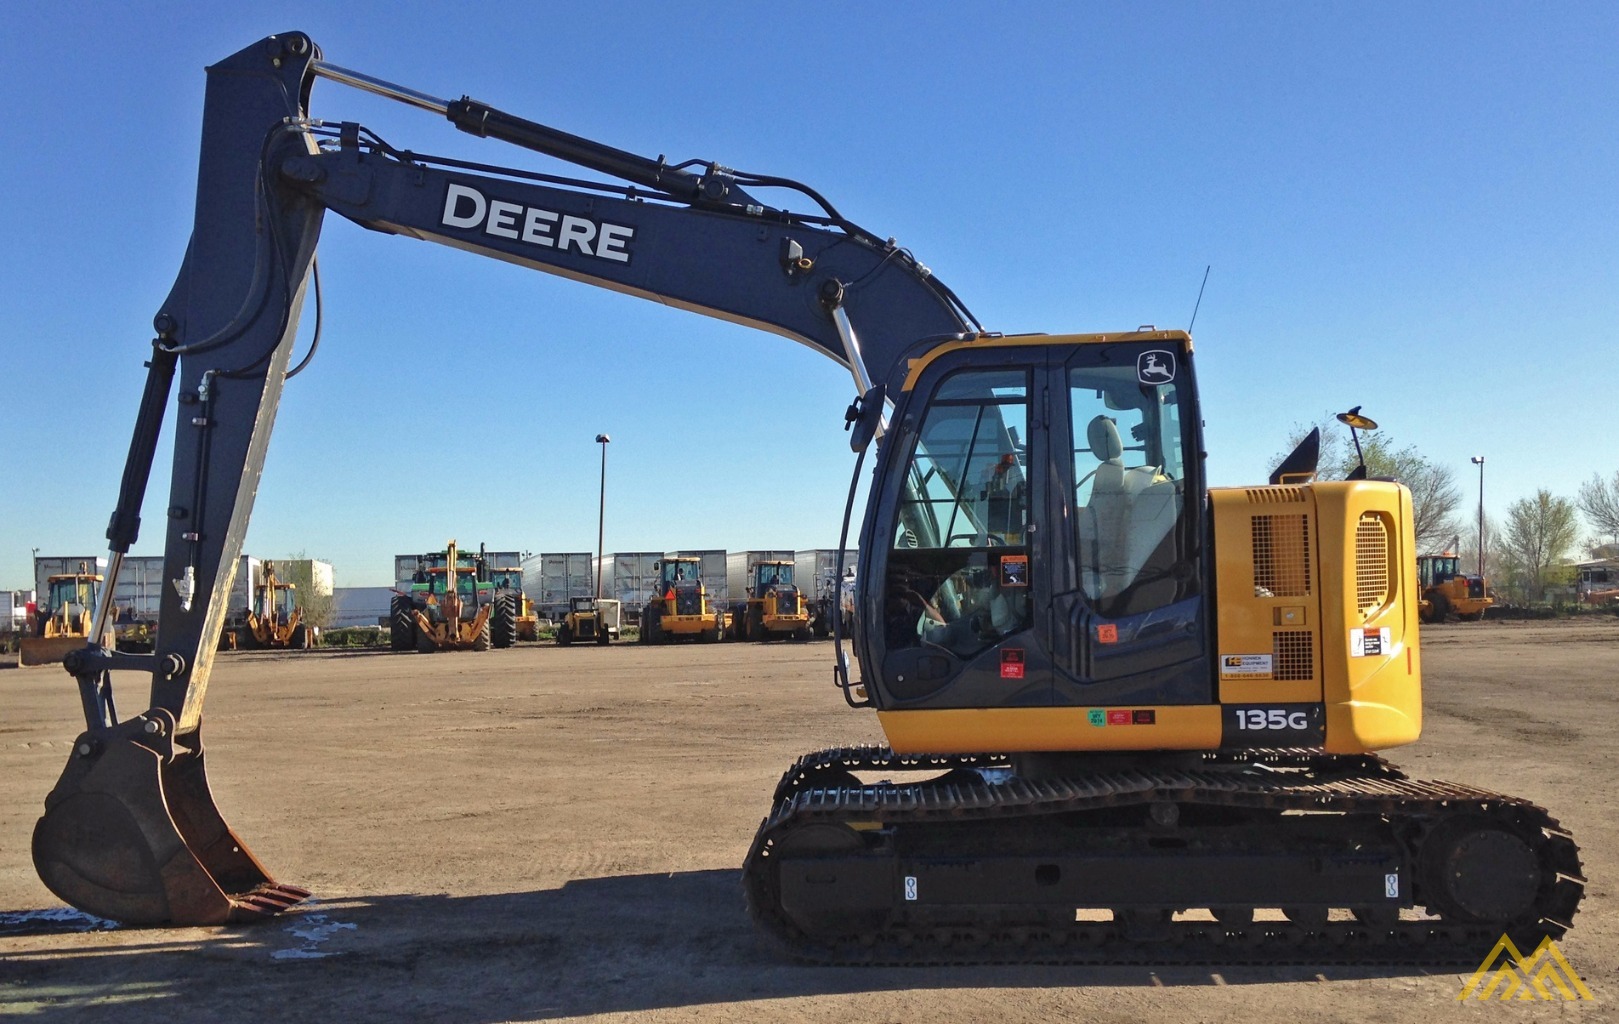 2014 John Deere 135g John Deere Excavators Earthmoving Equipment 2113